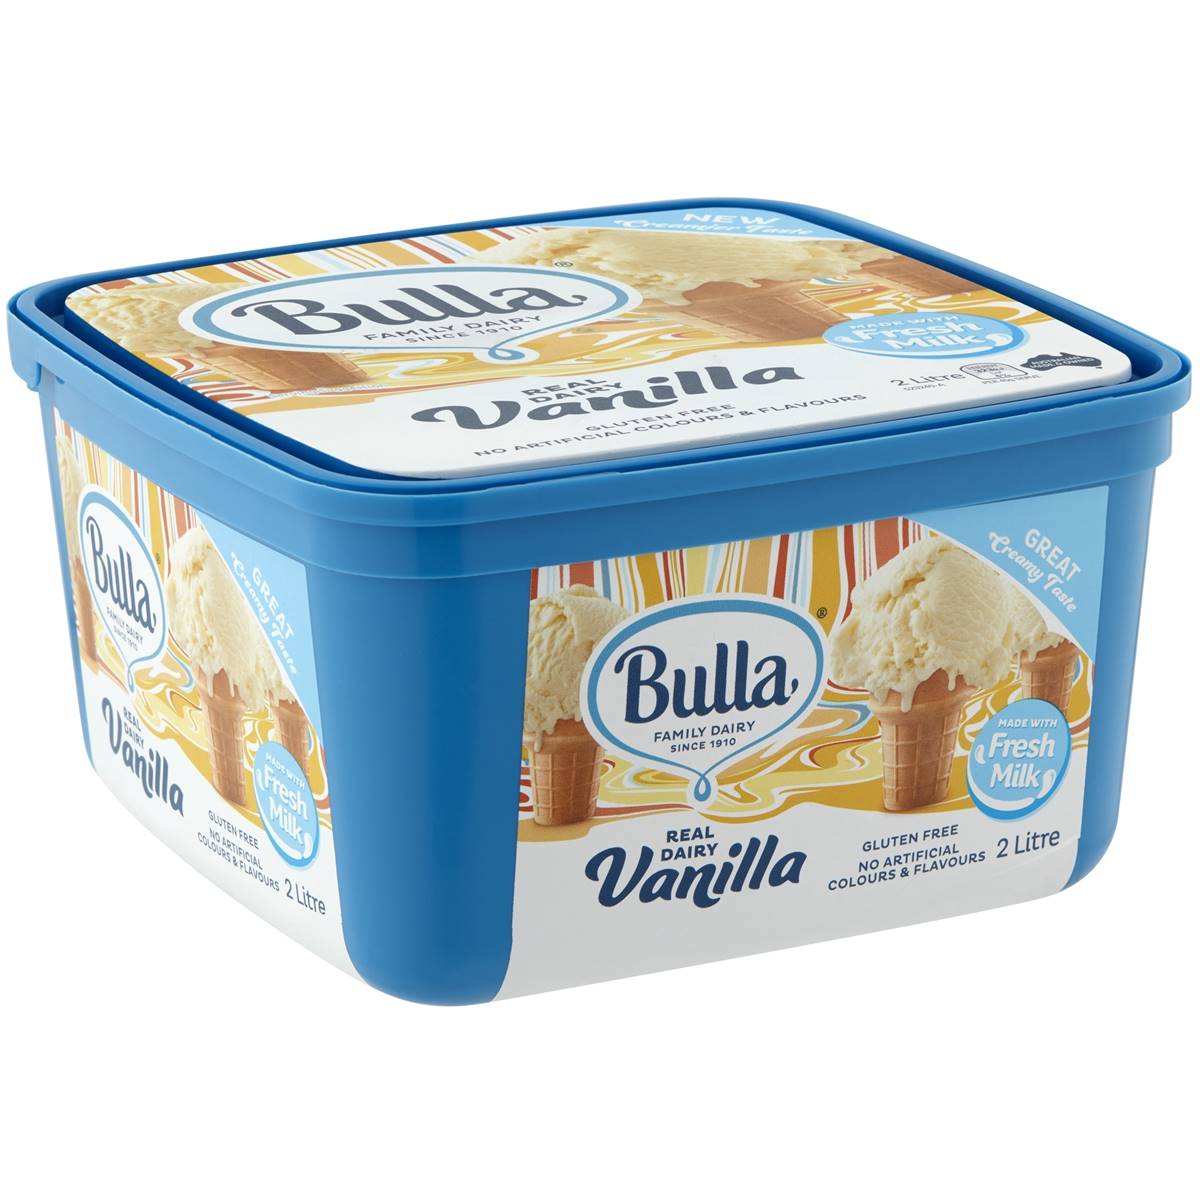 Bulla Real Dairy Vanilla Ice Cream 2L